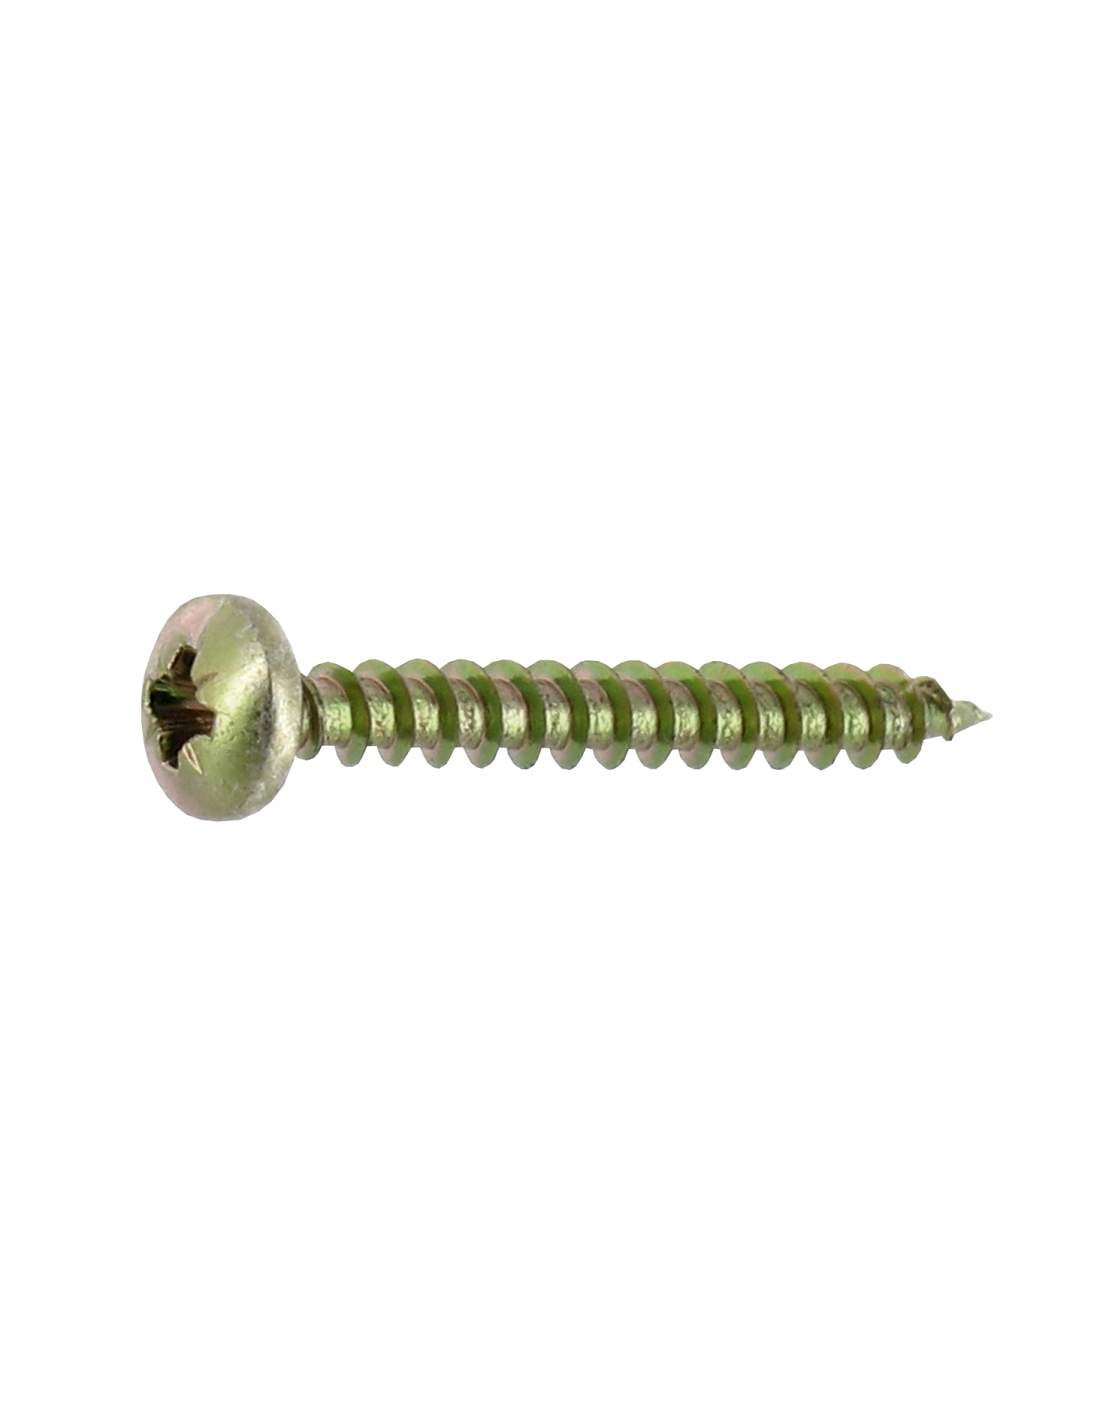 Pozidriv round-head agglomerated screws ABI 3x13, 45 pcs.